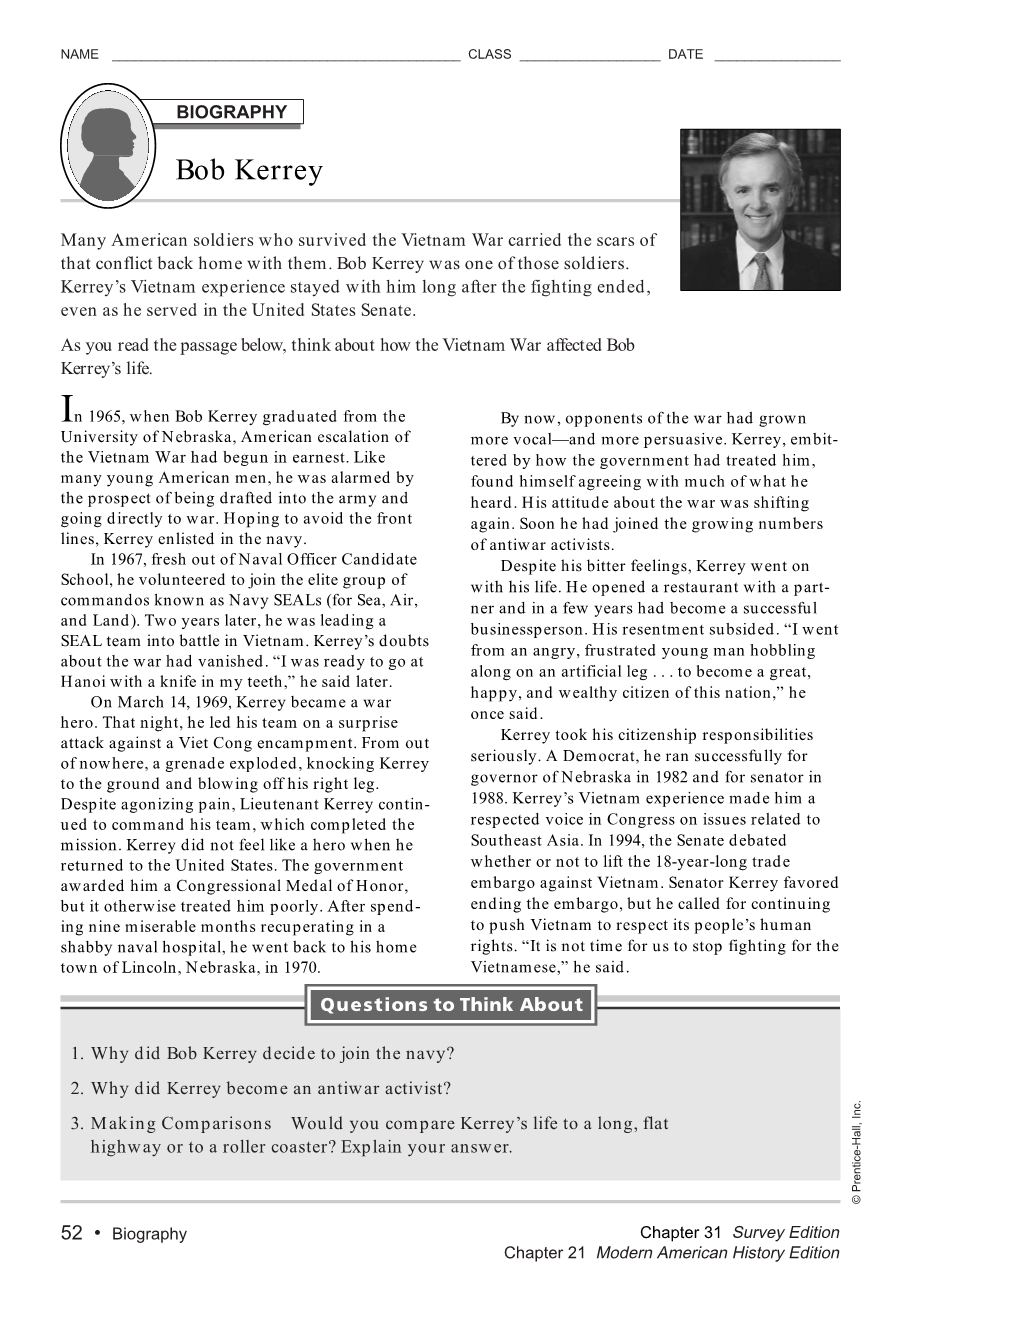 Biography Activity: Bob Kerrey